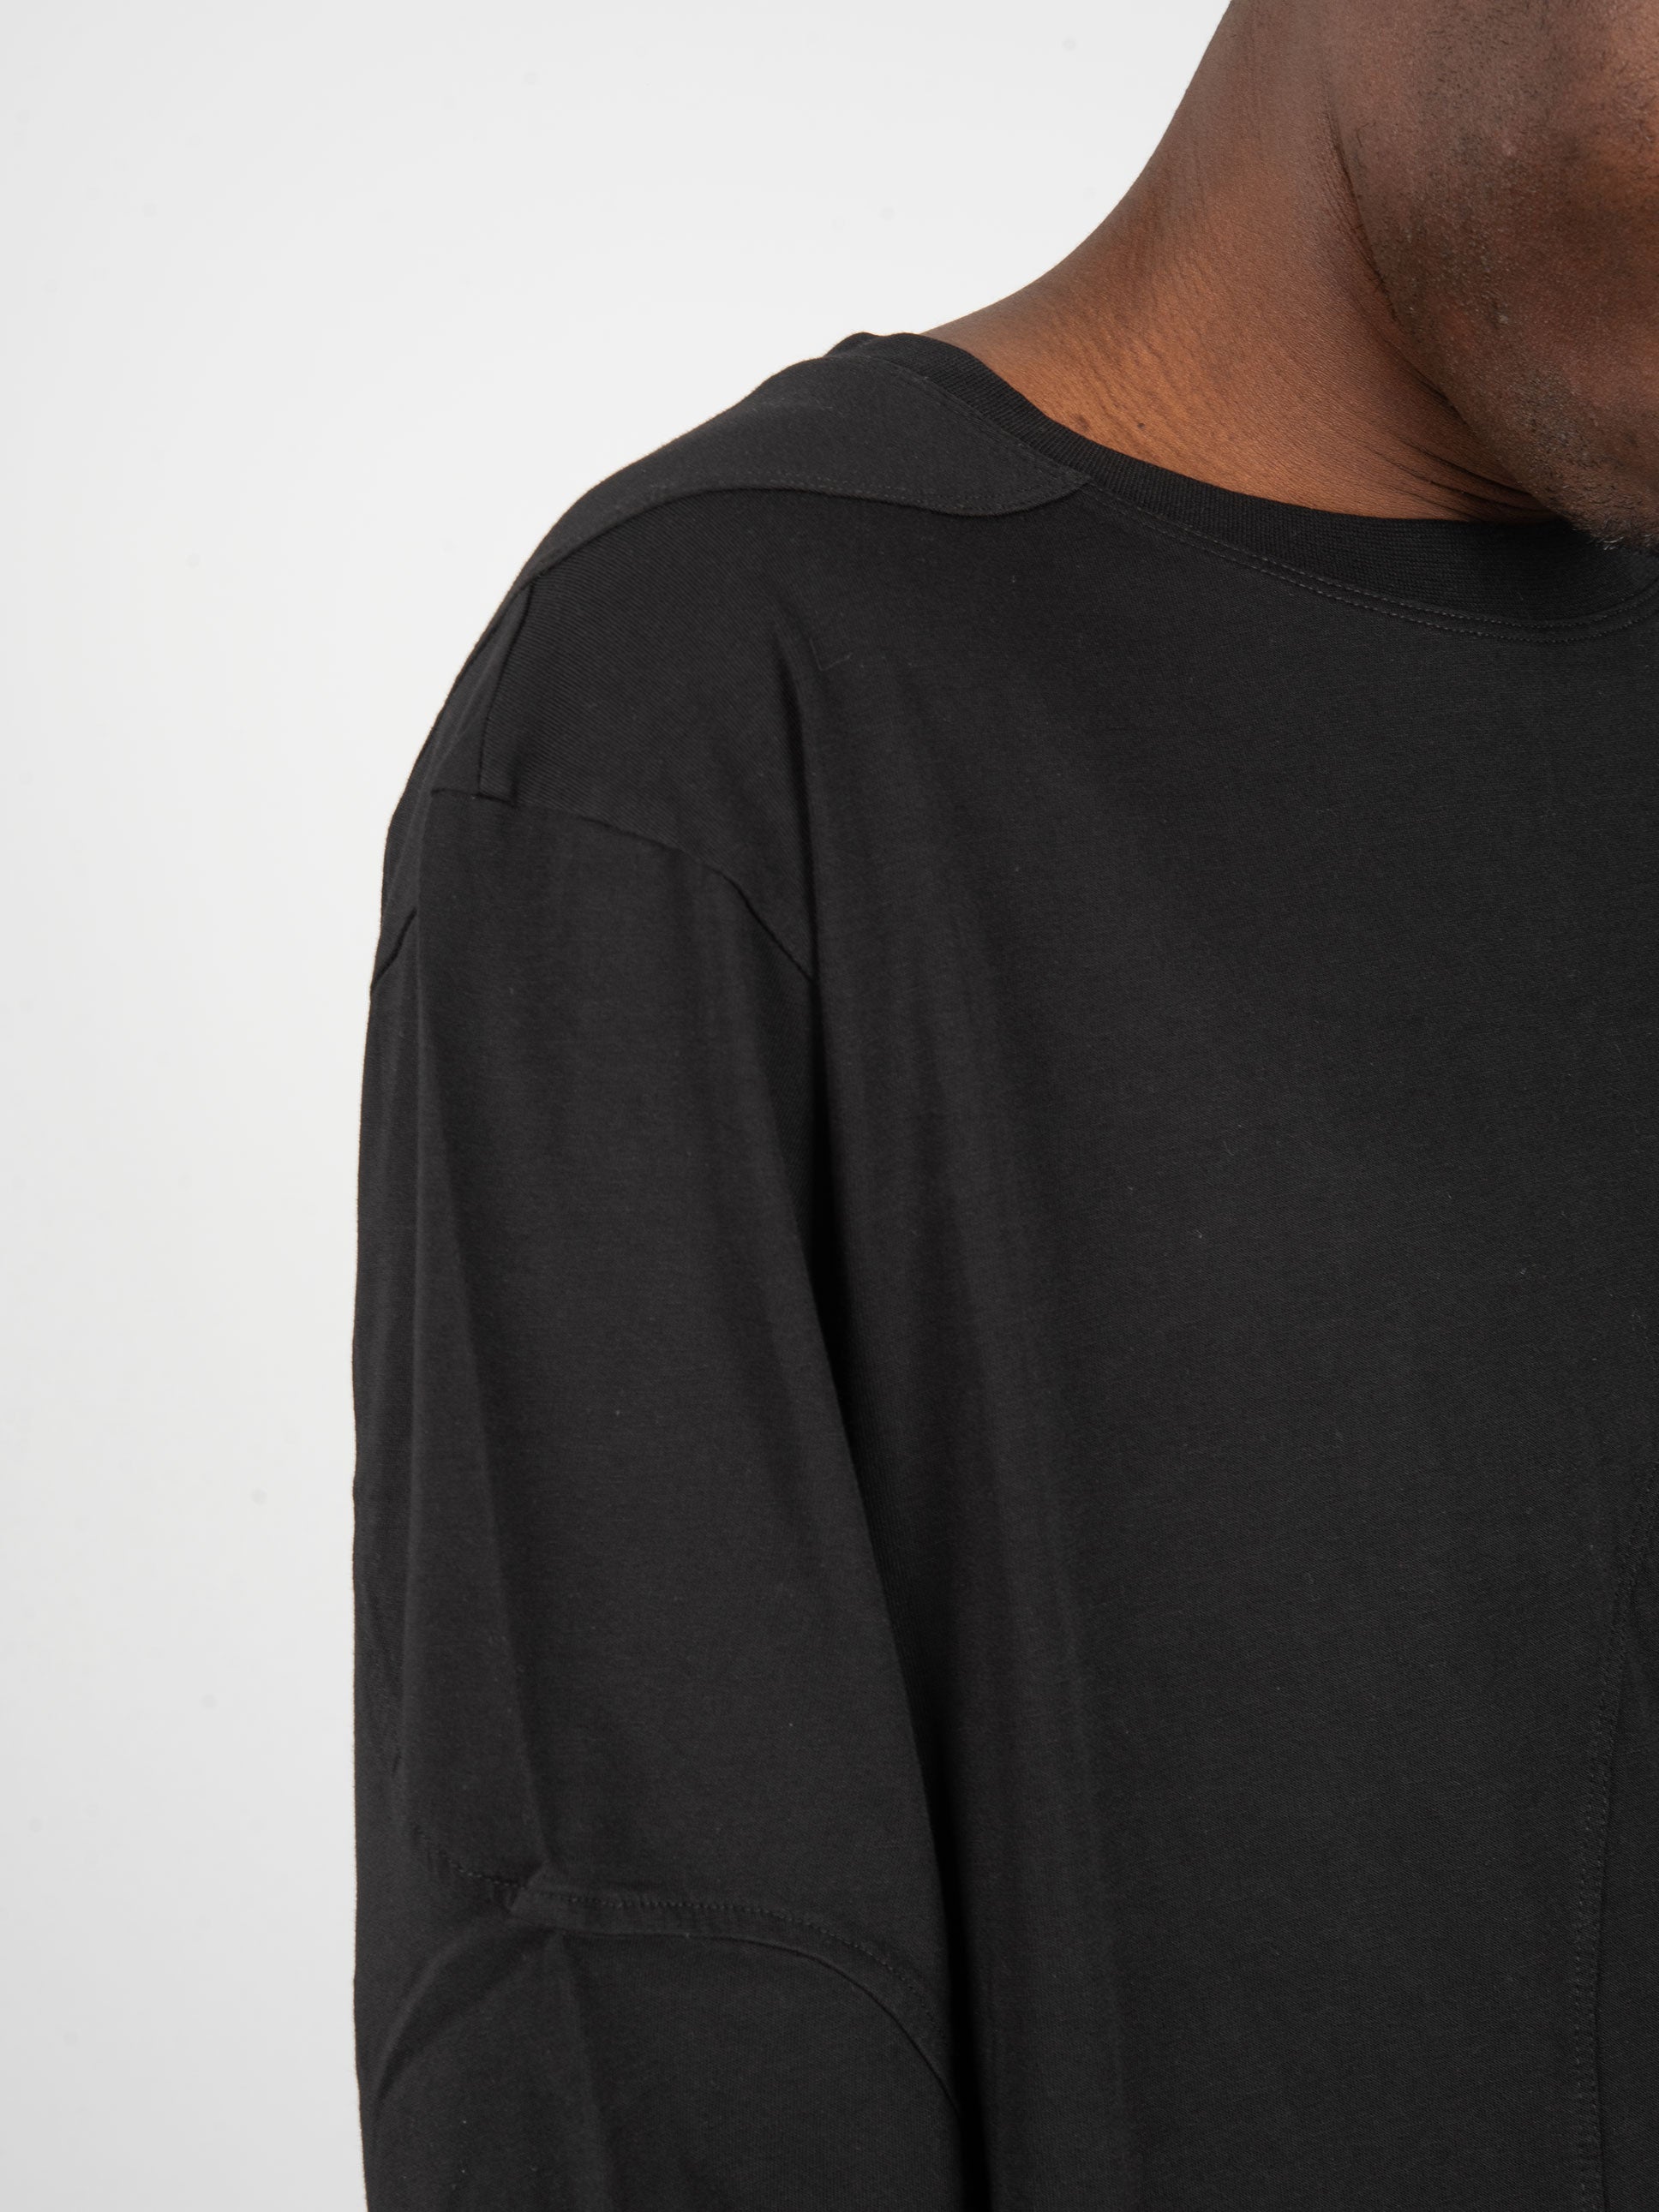 T-shirt Long Sleeve Tee - Black